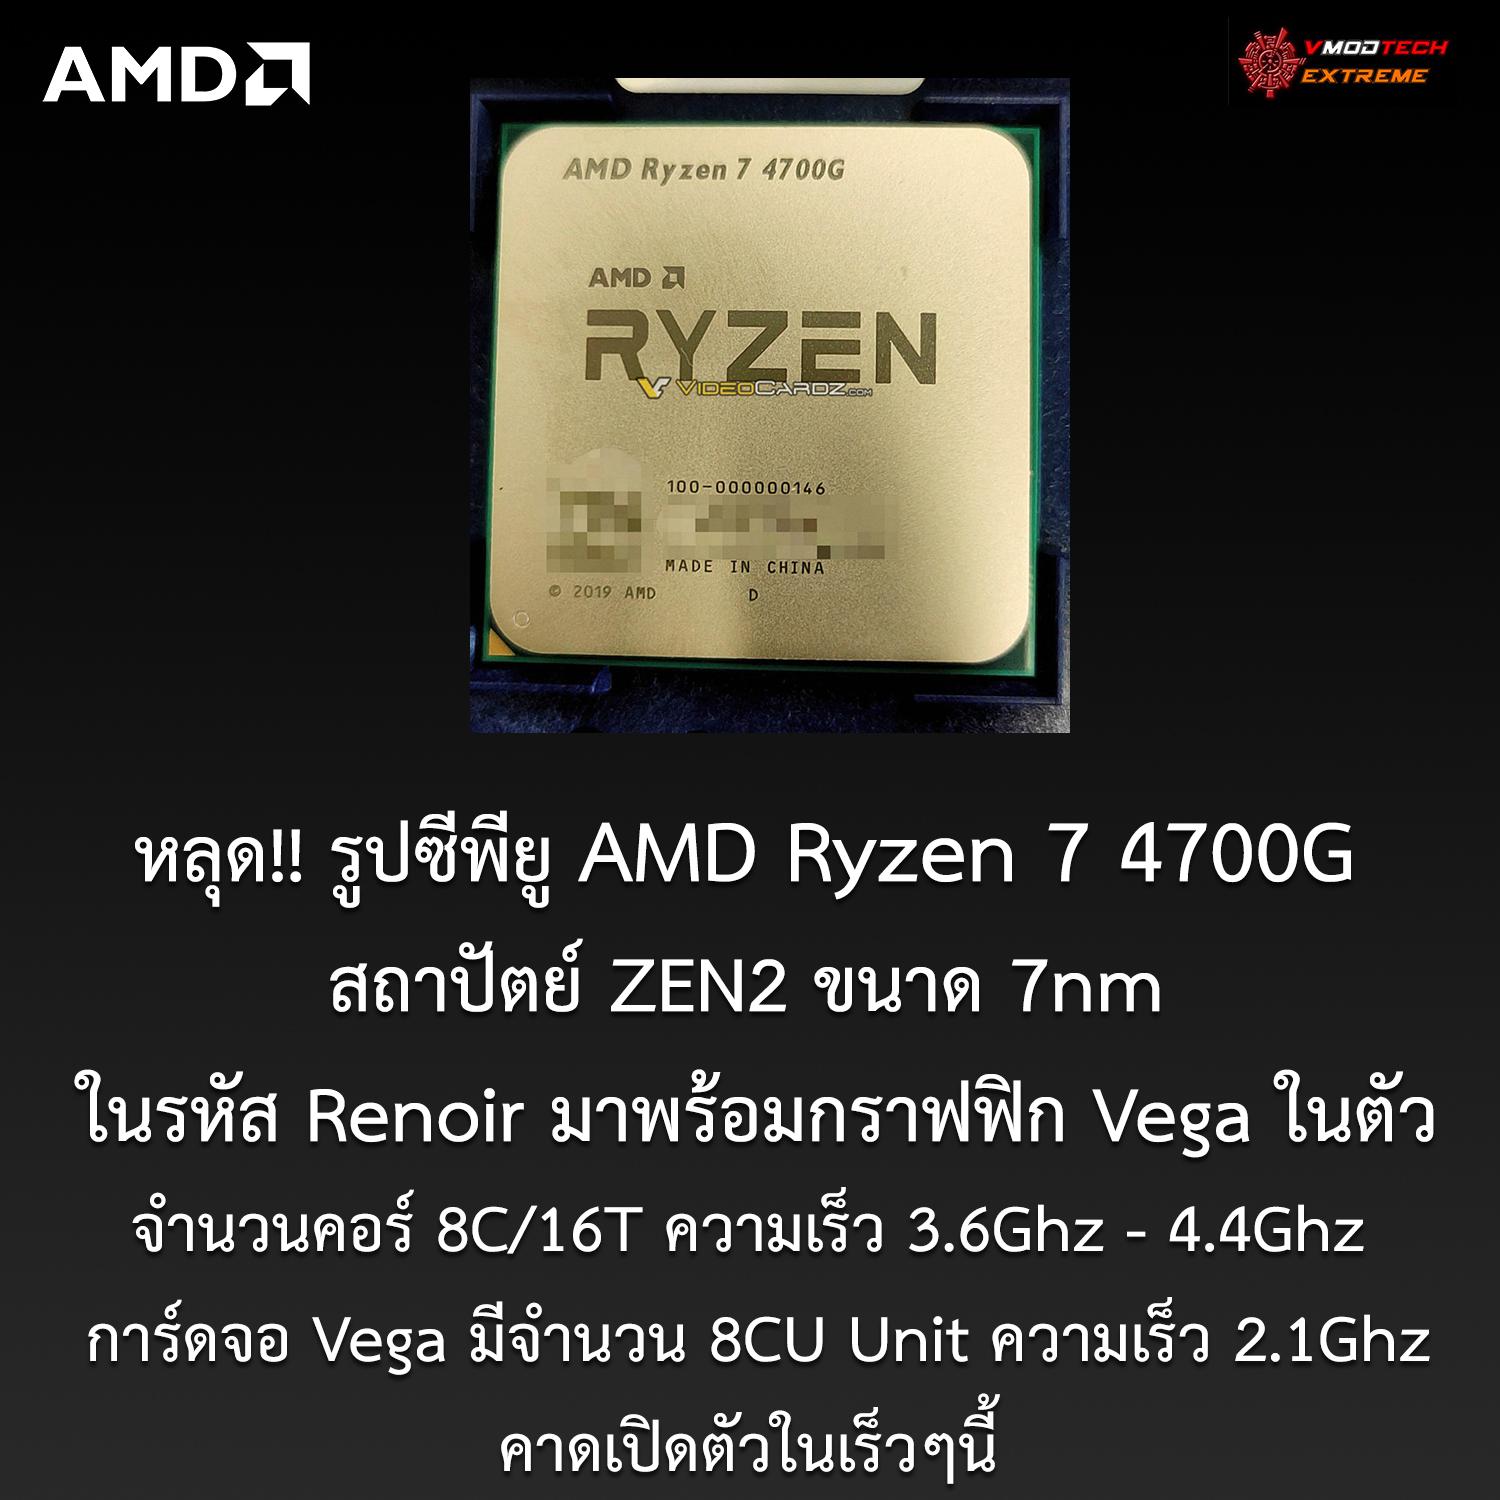 amd ryzen 7 4700g picture หลุด!! รูปซีพียู AMD Ryzen 7 4700G สถาปัตย์ ZEN2 ขนาด 7nm ในรหัส Renoir มาพร้อมกราฟฟิก Vega ในตัว 